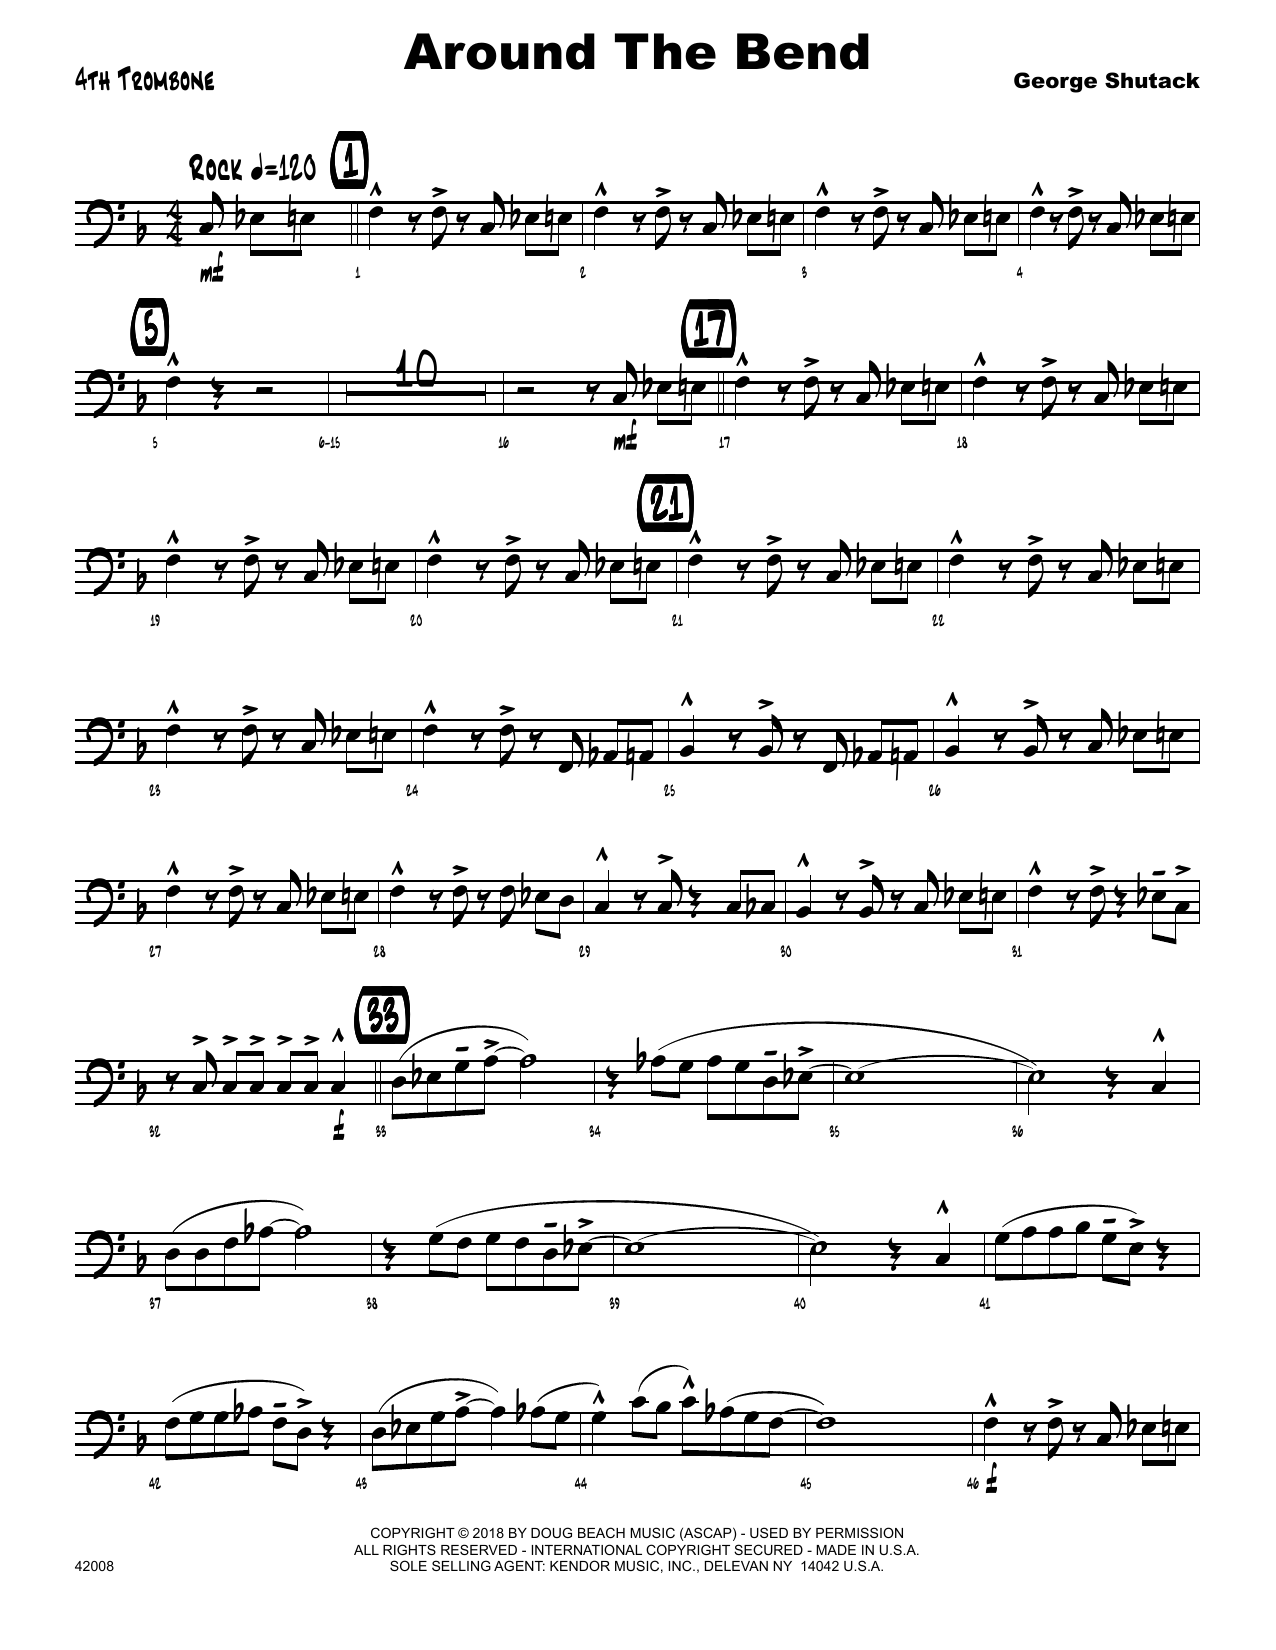 Download George Shutack Around The Bend - 4th Trombone Sheet Music